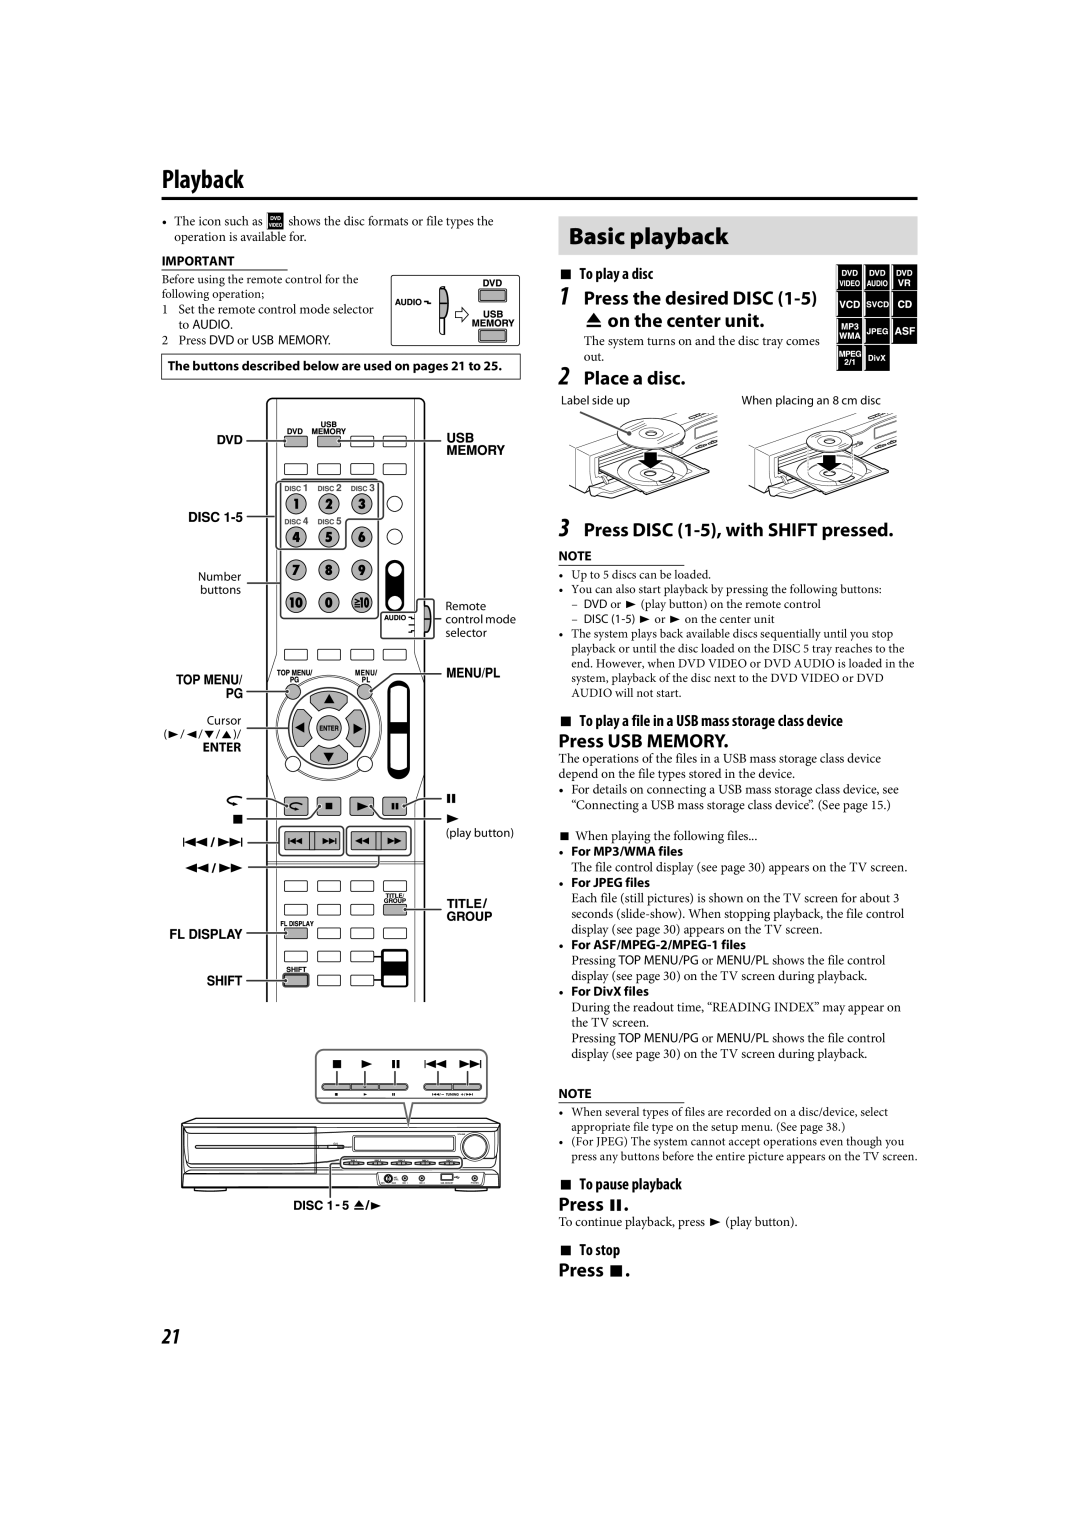 JVC LVT1504-005B Playback, Basic playback, Press the desired DISC 0 on the center unit, Place a disc, Press USB MEMORY 